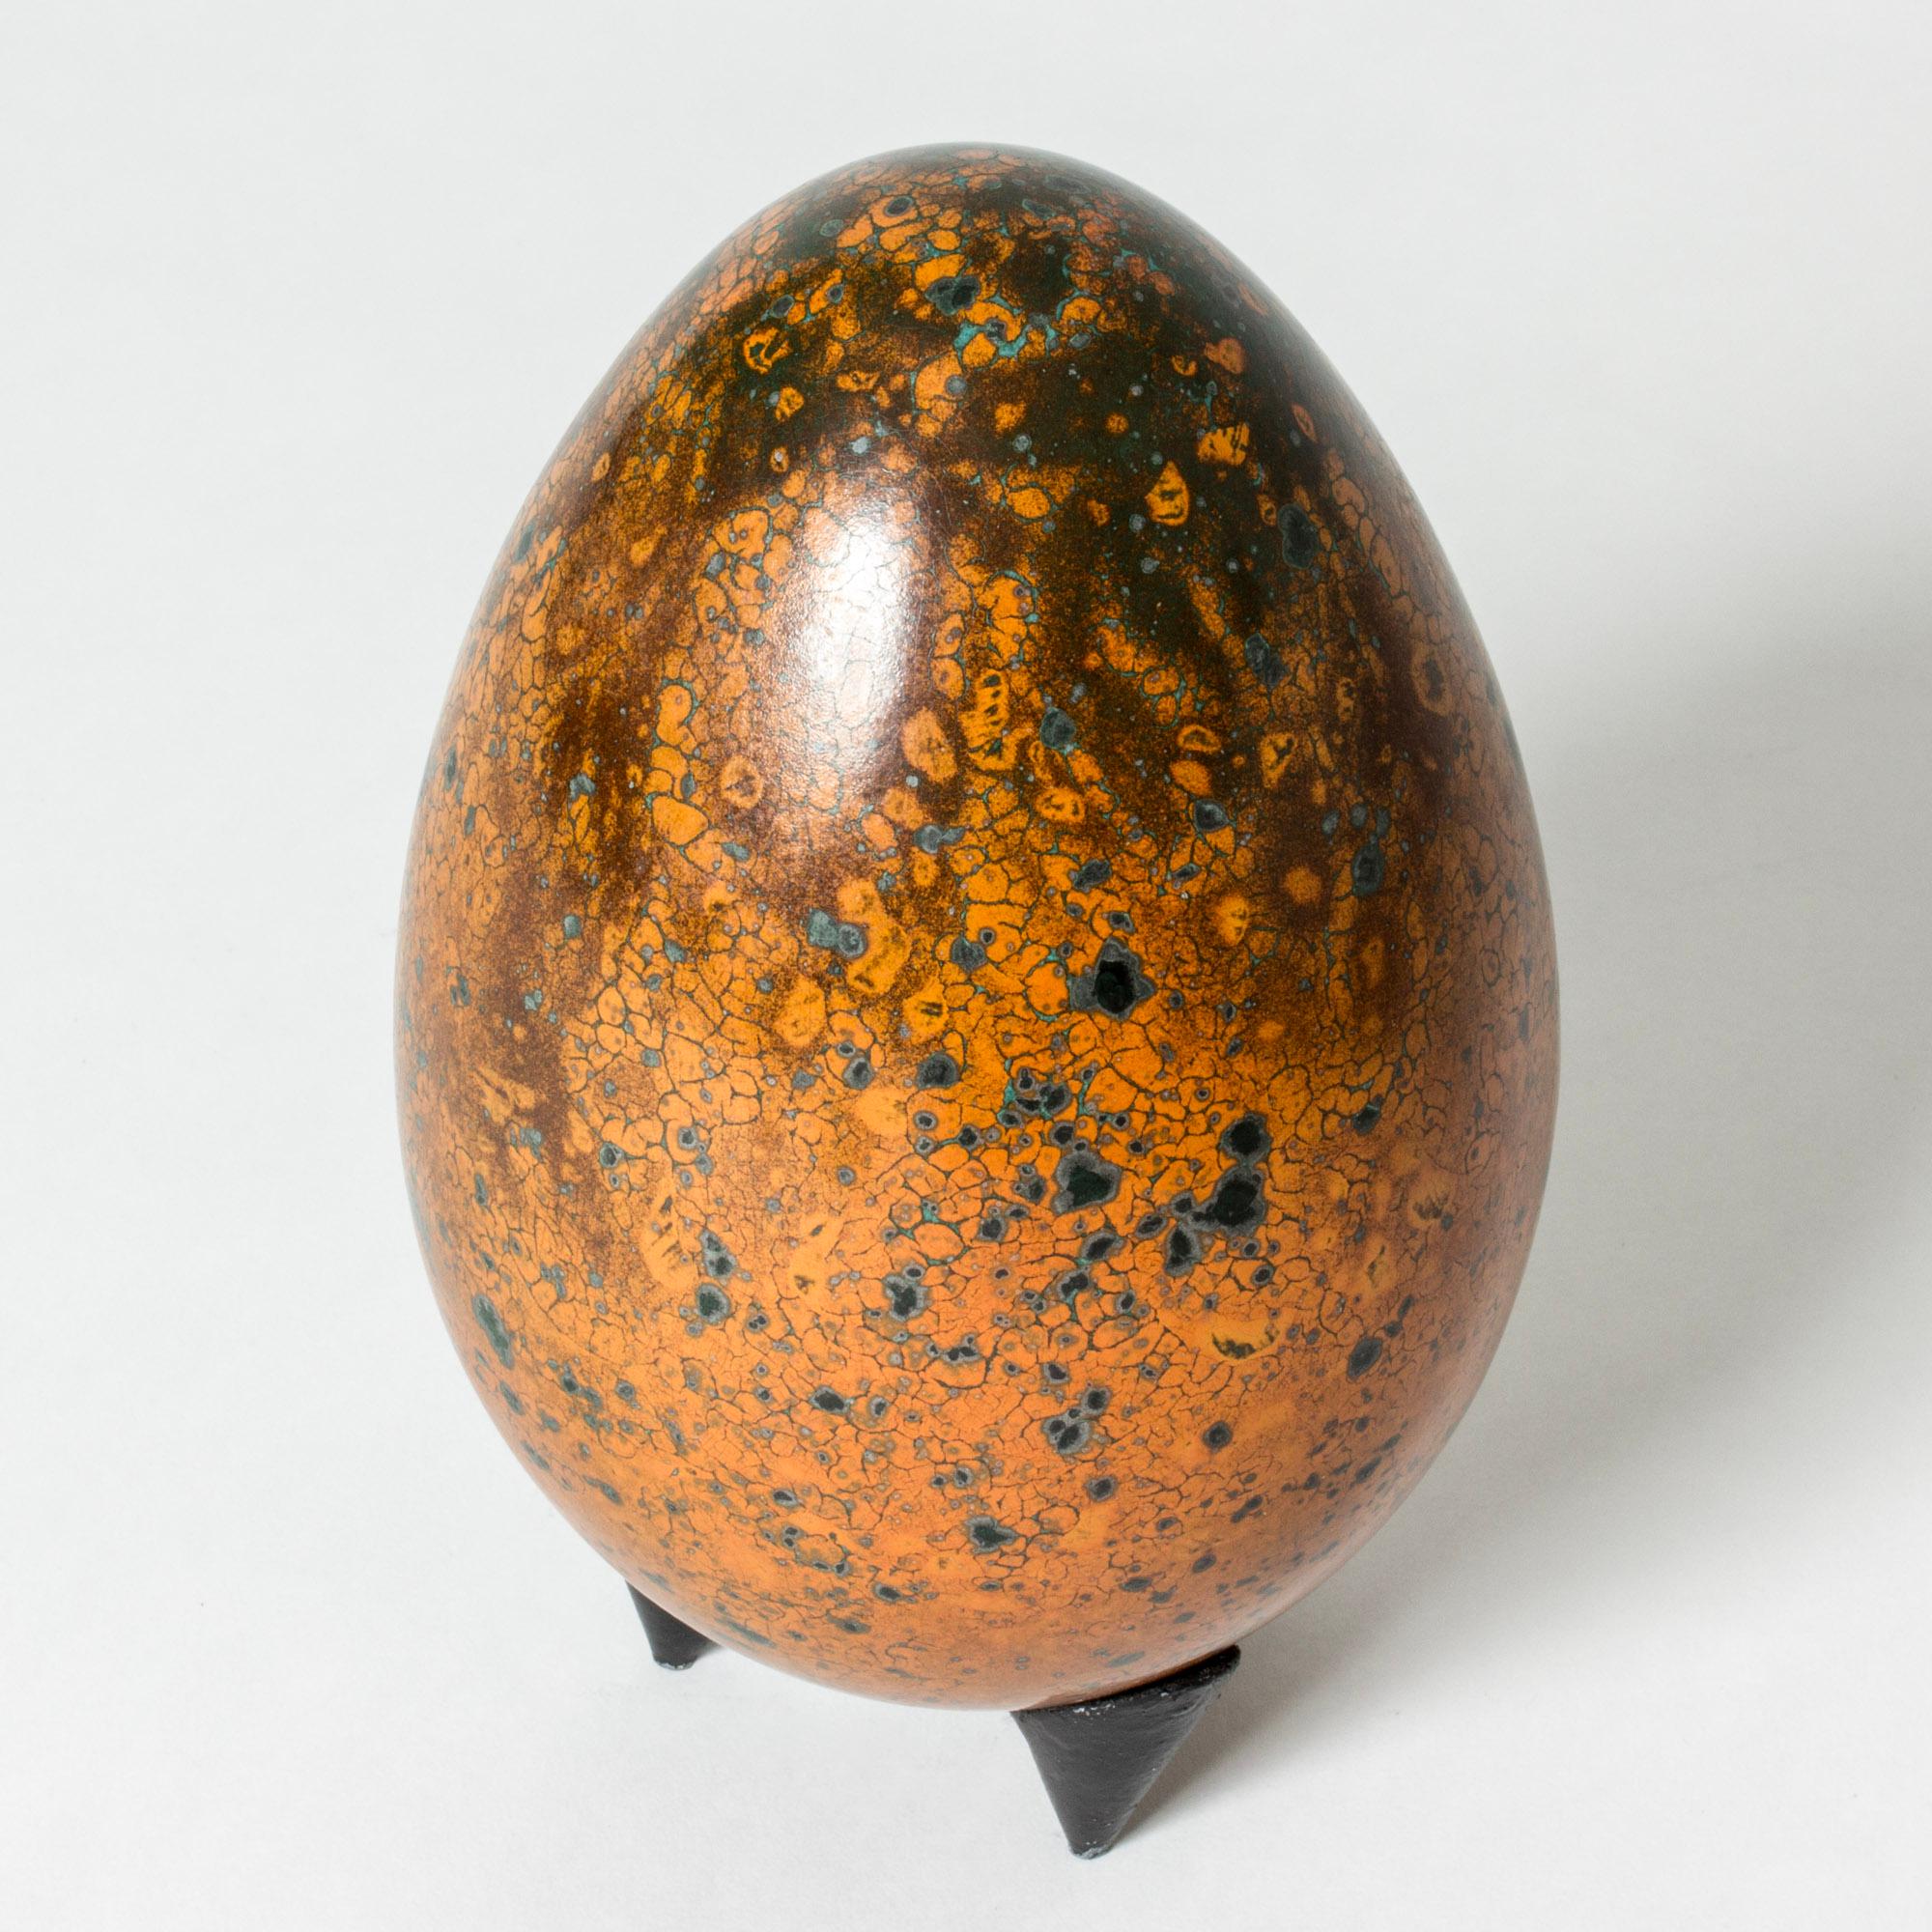 French Scandinavian Modern Faience Egg sculpture by Hans Hedberg, Biot, France